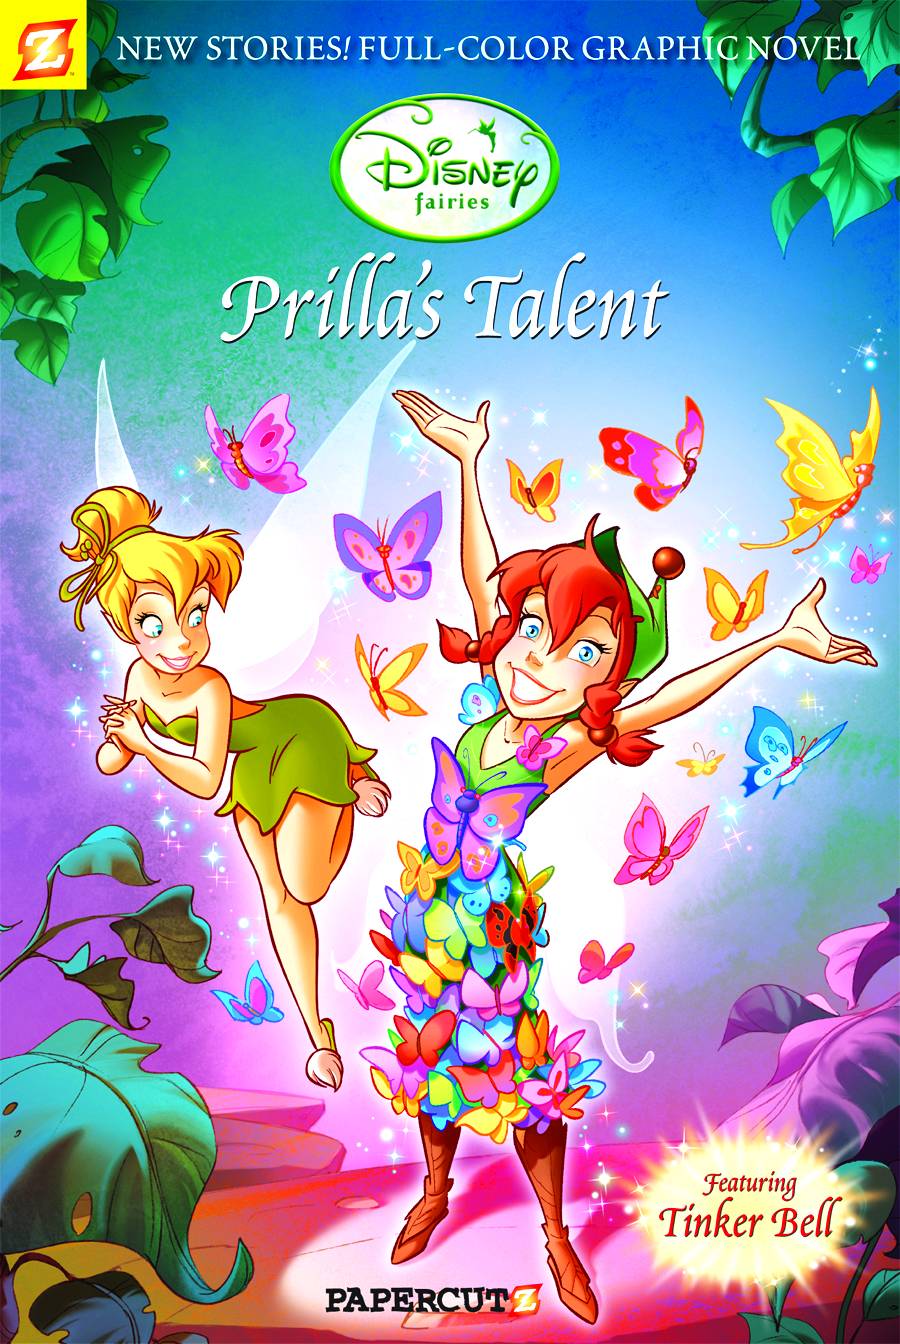 disney fairies names and talents